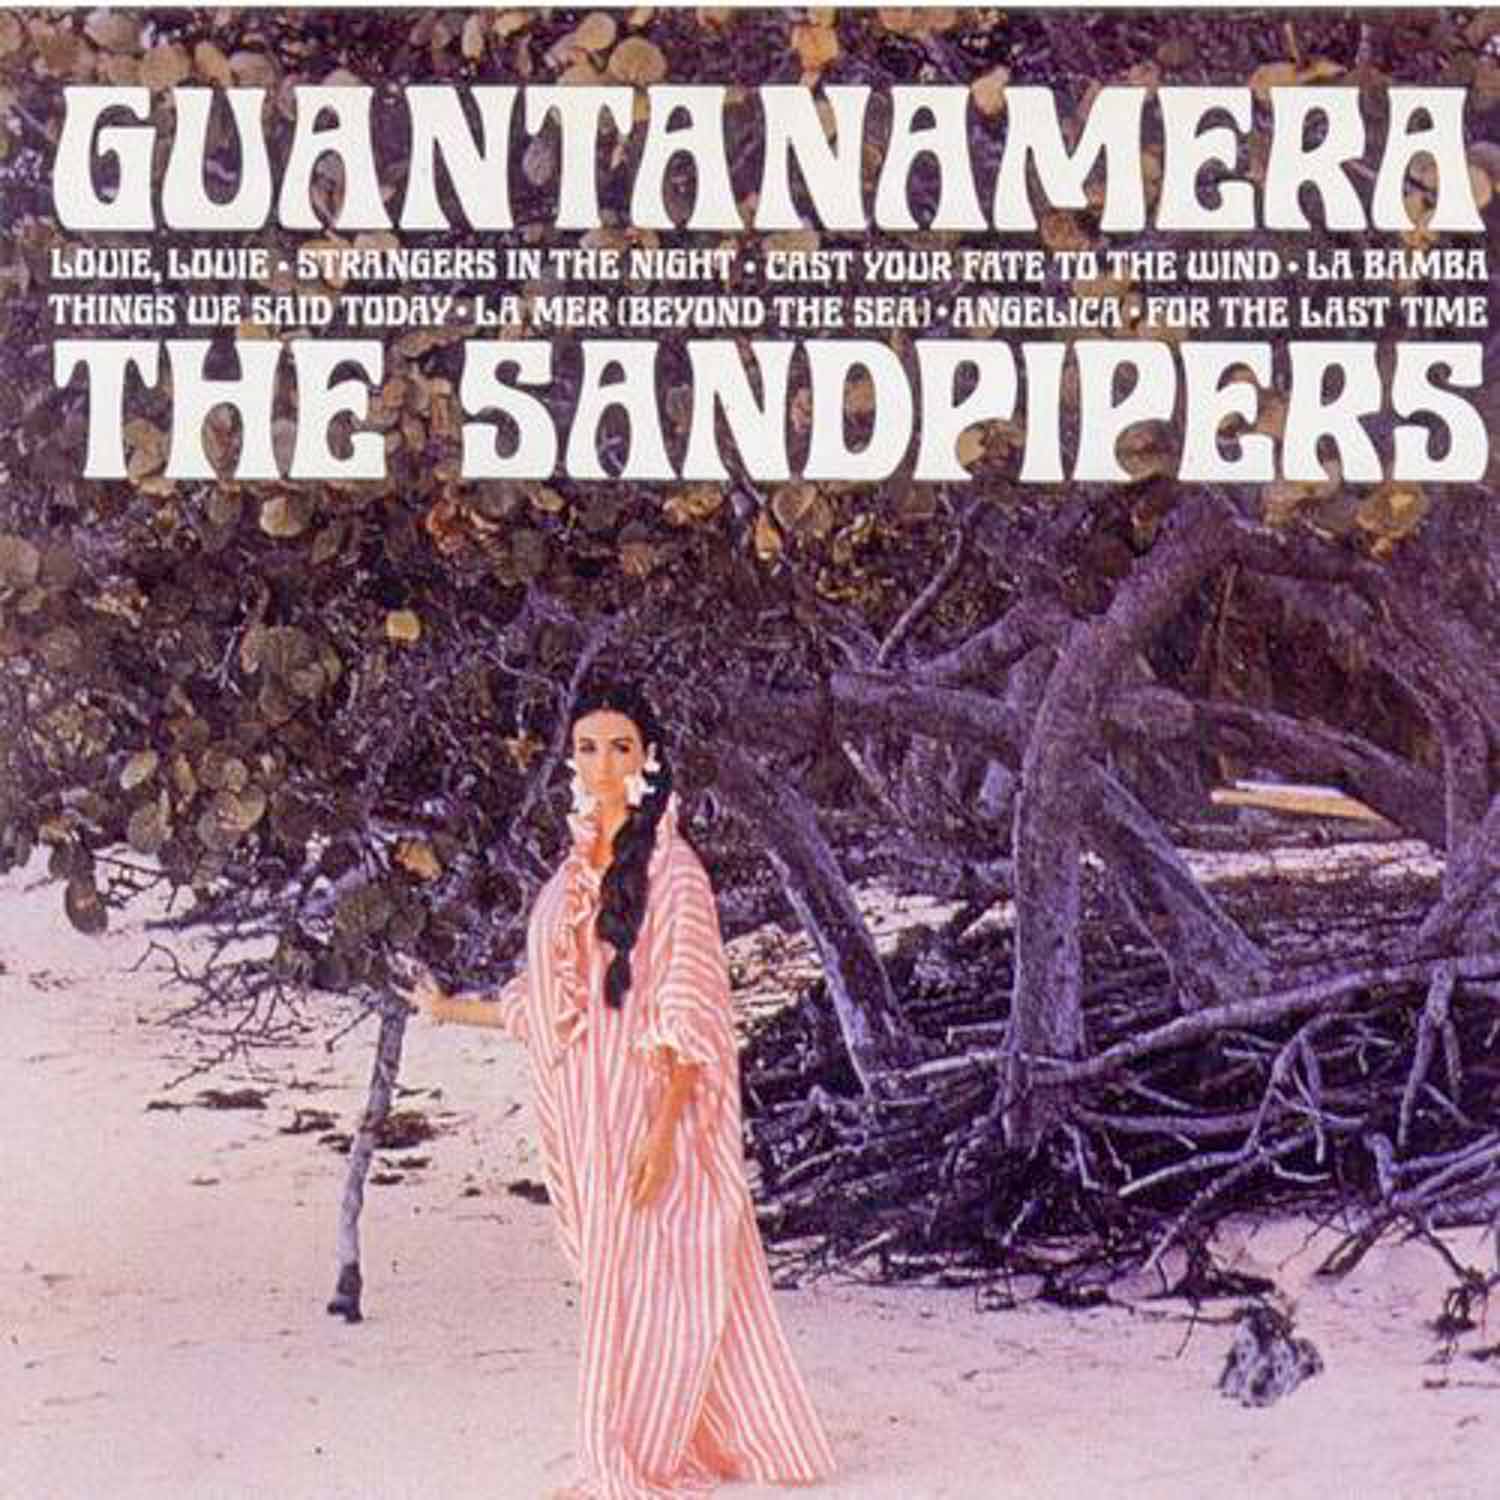 The Sandpipers  Guantanamera (212008)  *LP 12'' (Vinyl)*. 